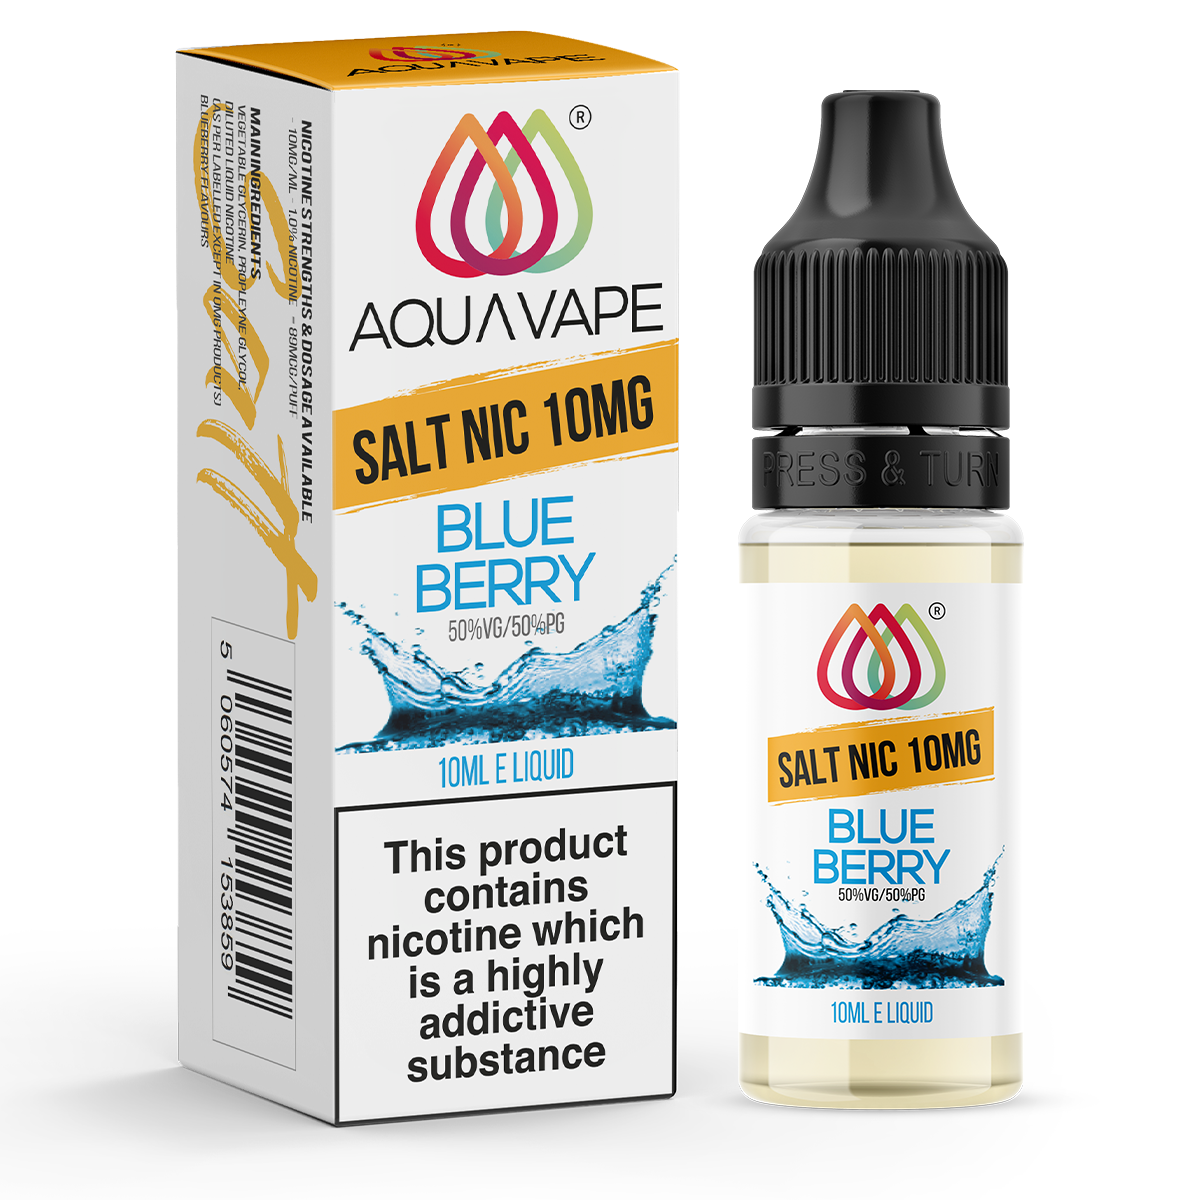 Blueberry Lemon Nic Salt E-Liquid by Blox, Free UK Delivery